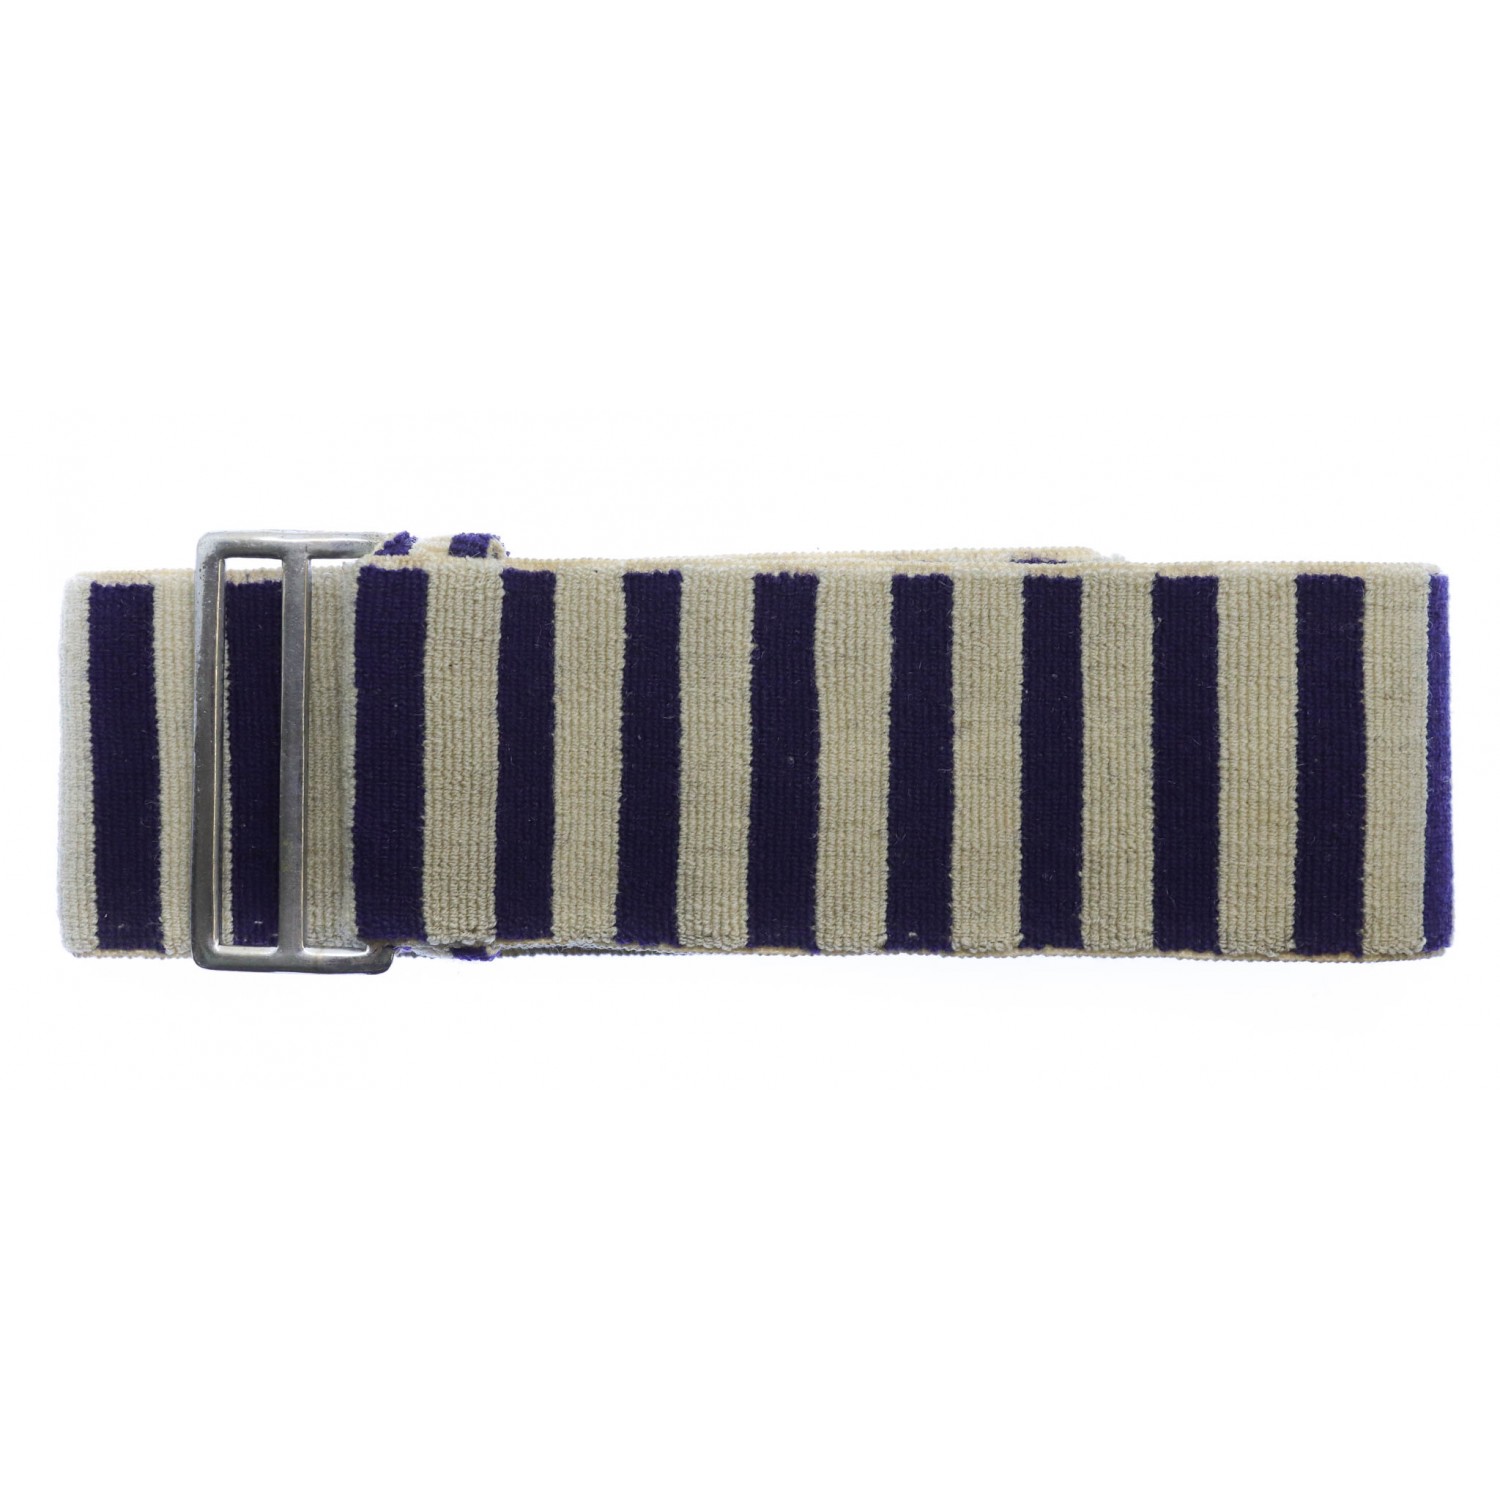 Metropolitan Police Duty Arm Band | Armbänder